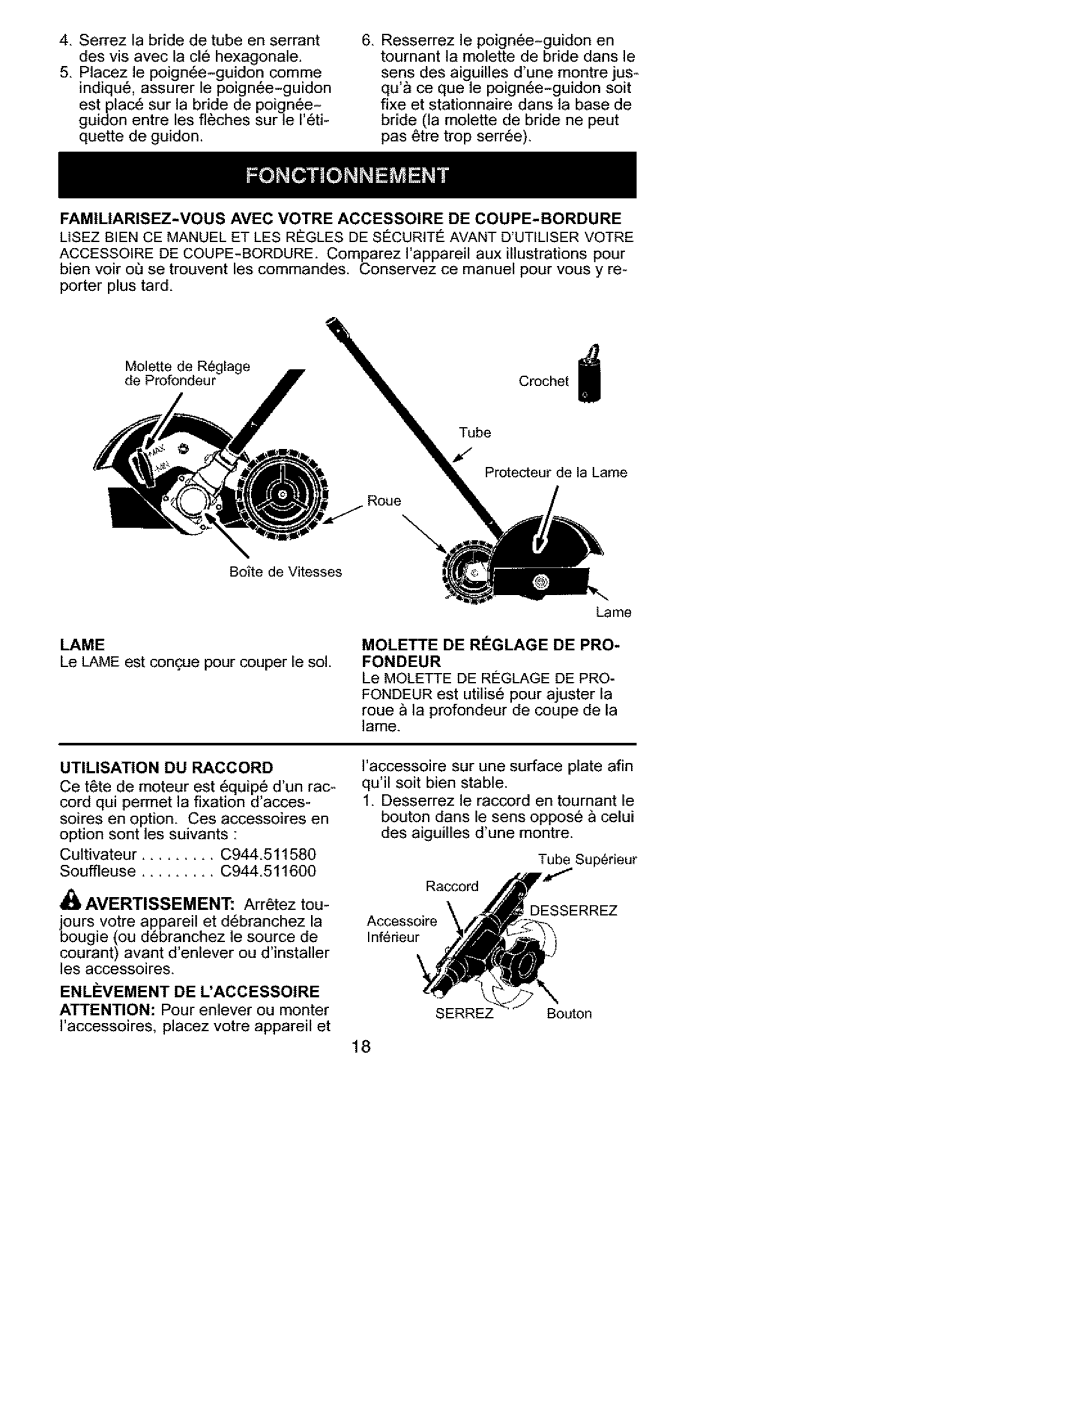 Craftsman 51157 manual 4,Serrezlabridedetubeenserrant, Lame, Utilisat On Du Raccord, Molette De R#Glage De Pro- Fondeur 